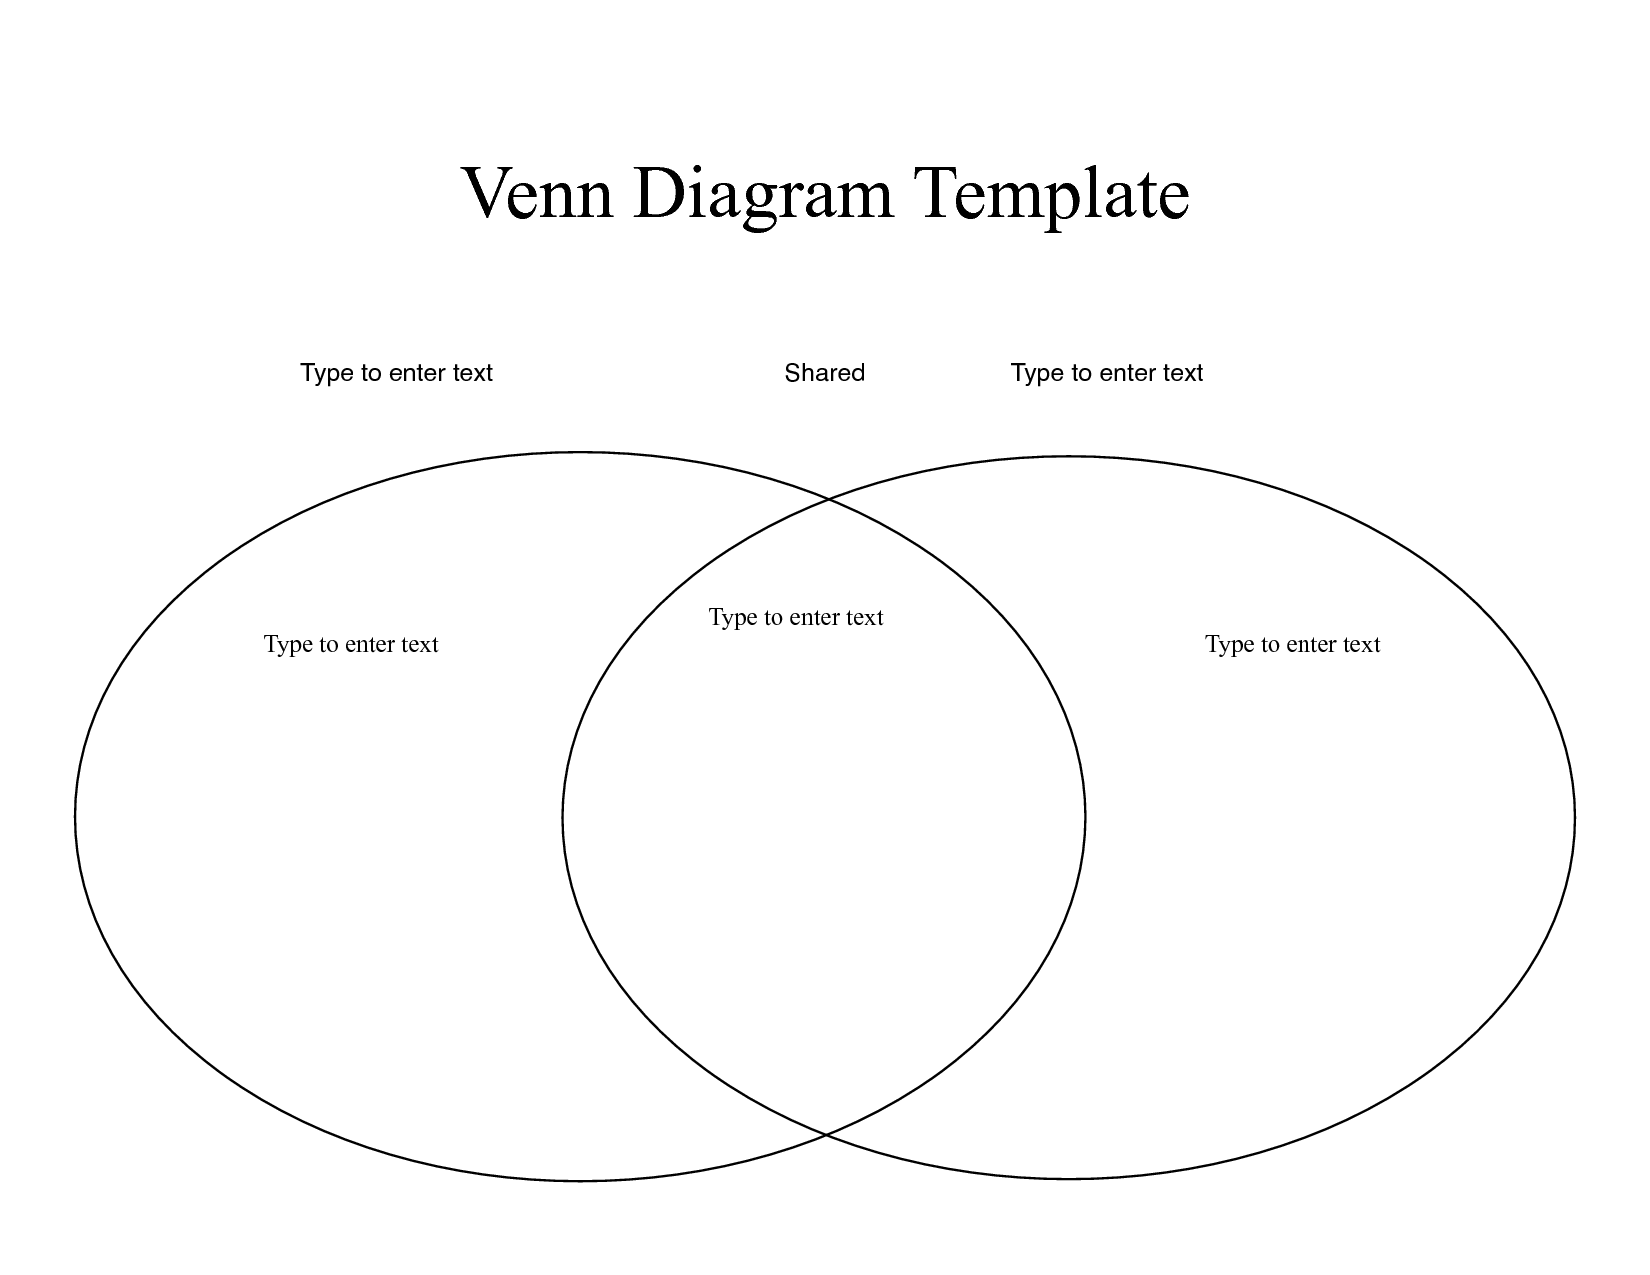 venn diagram templates | Venn Diagram Template - PDF | School Stuff ...